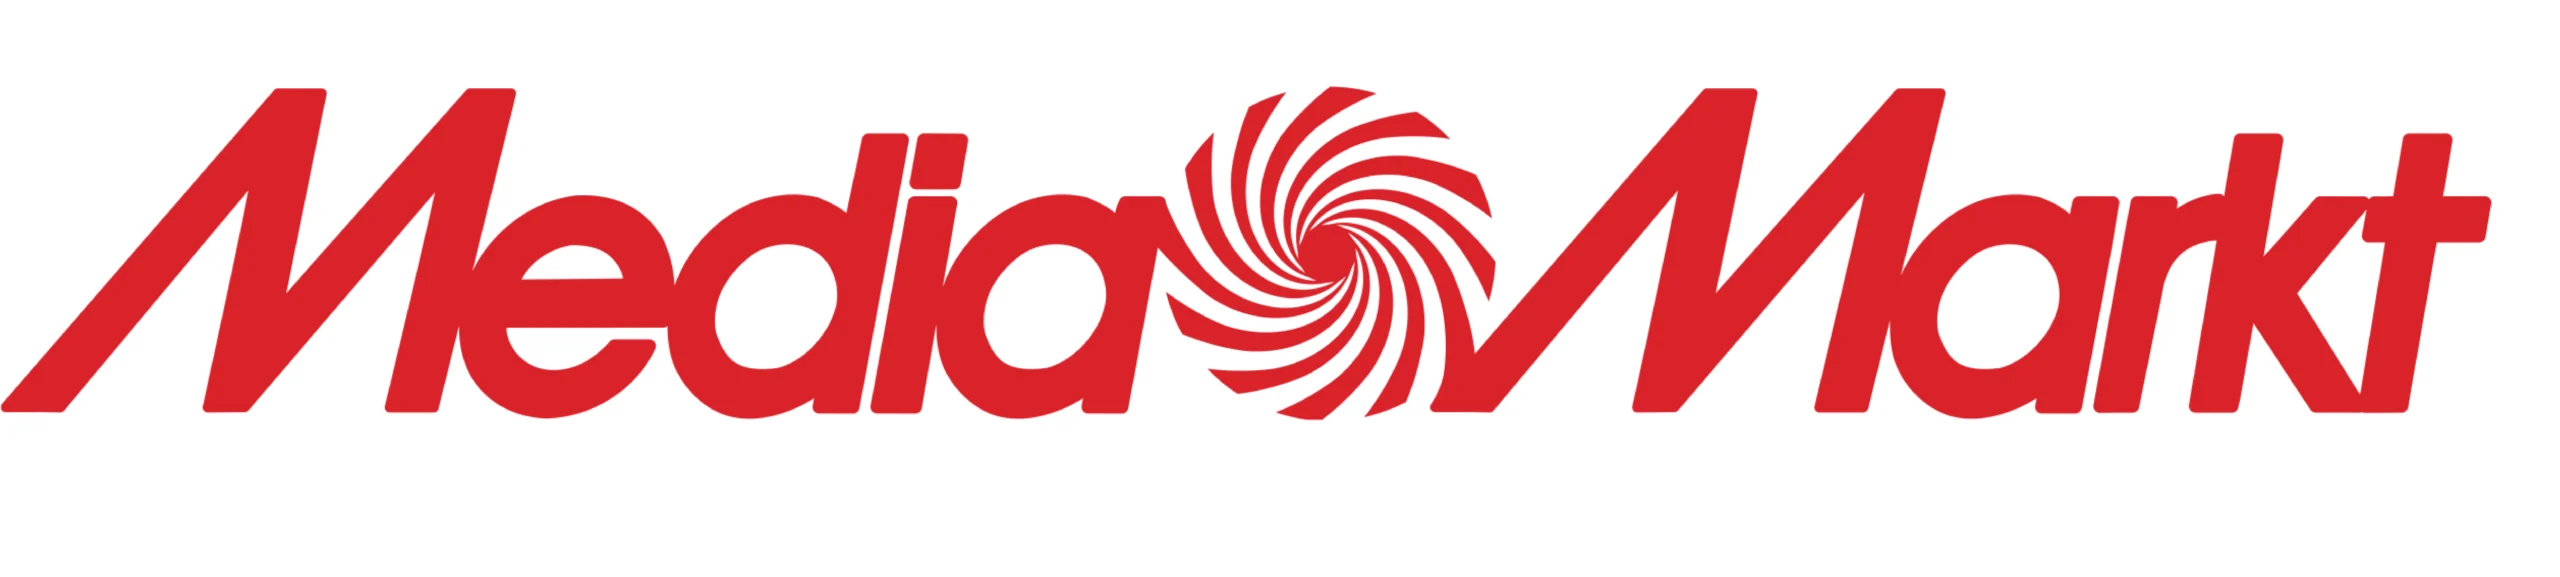 Image of MediaMarkt logo